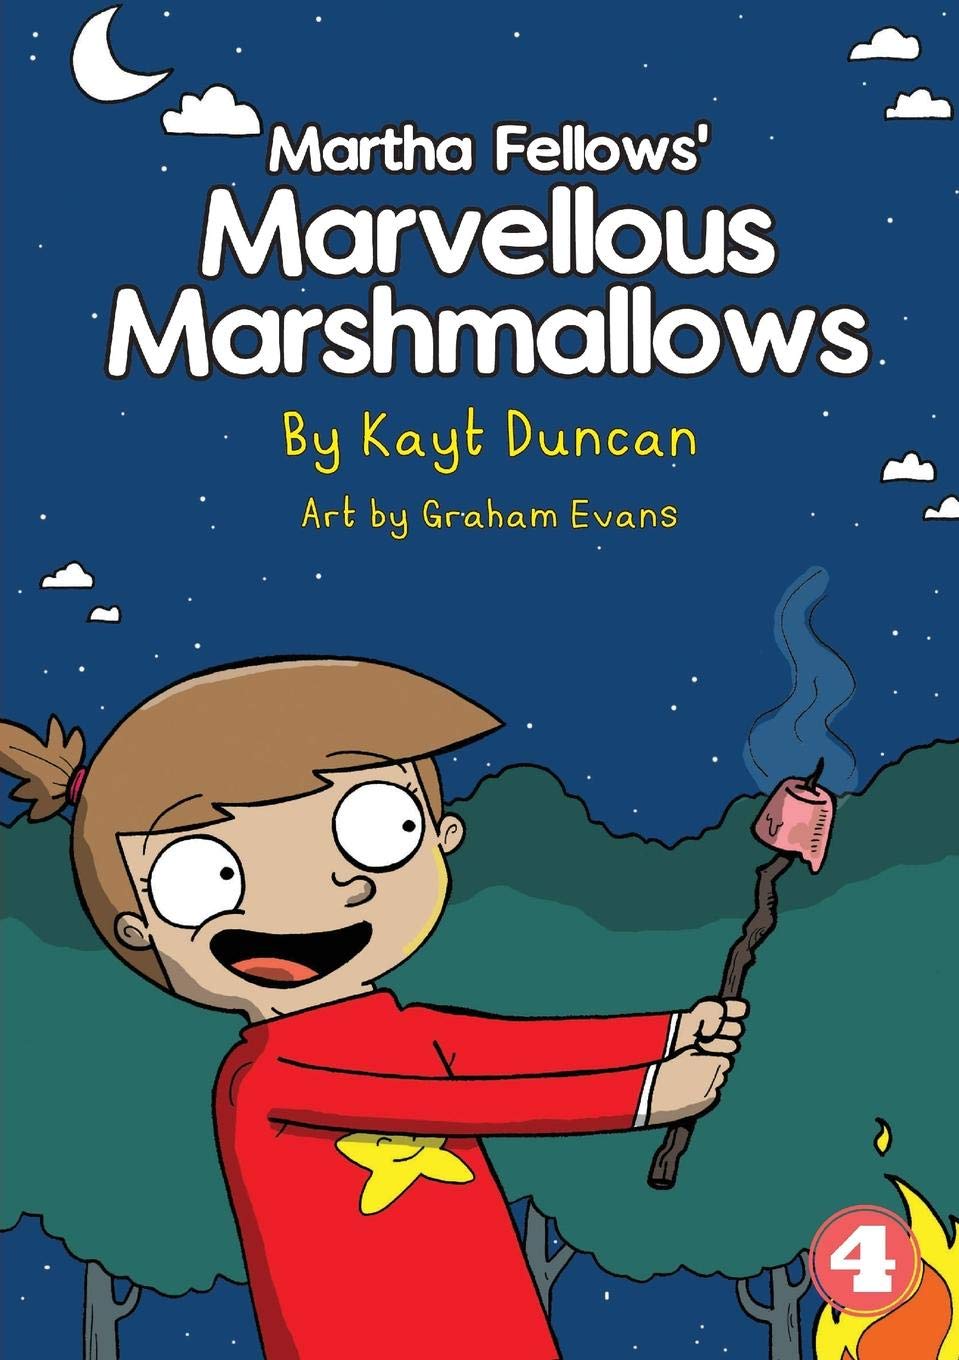 Martha Fellows Marvellous Marshmallows